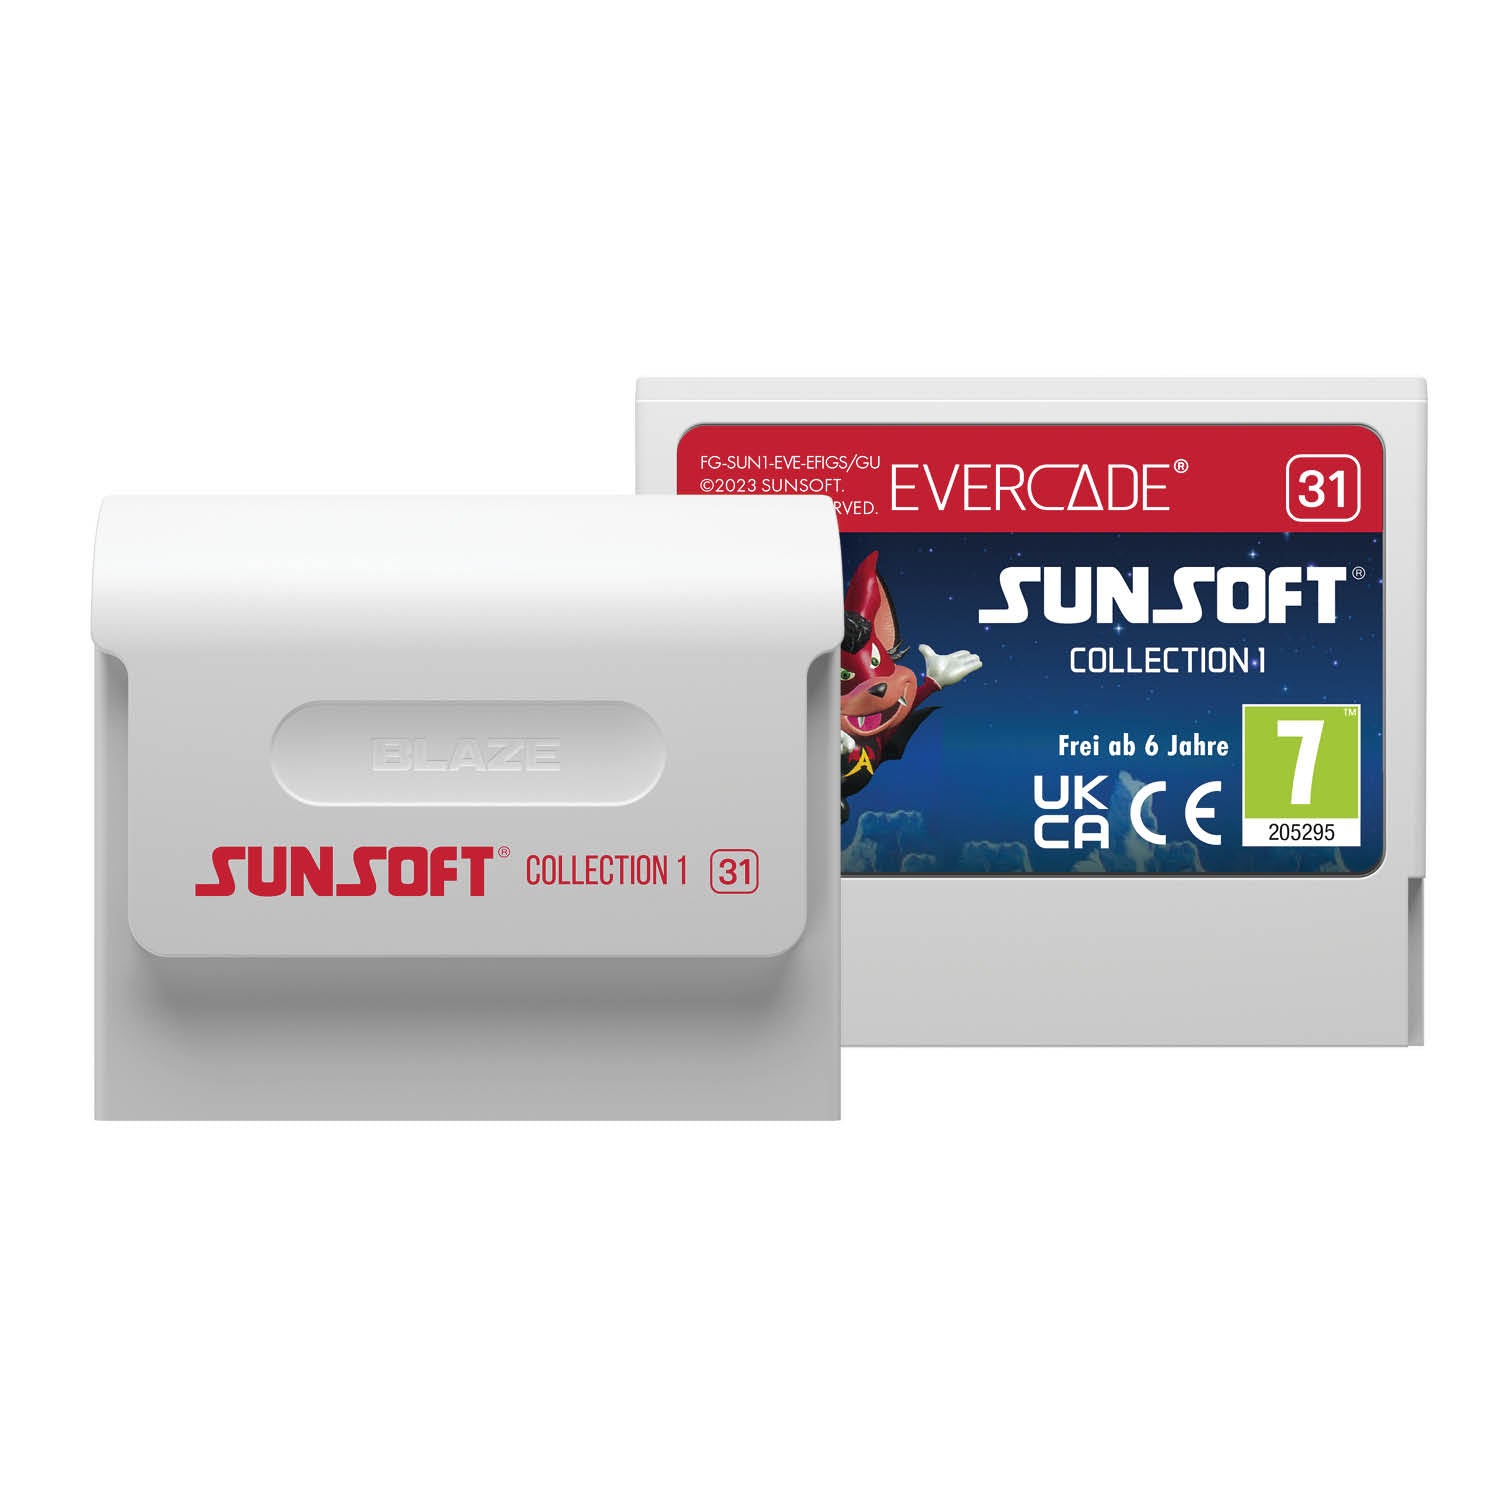 #31 Sunsoft Collection 1 - Evercade Cartridge